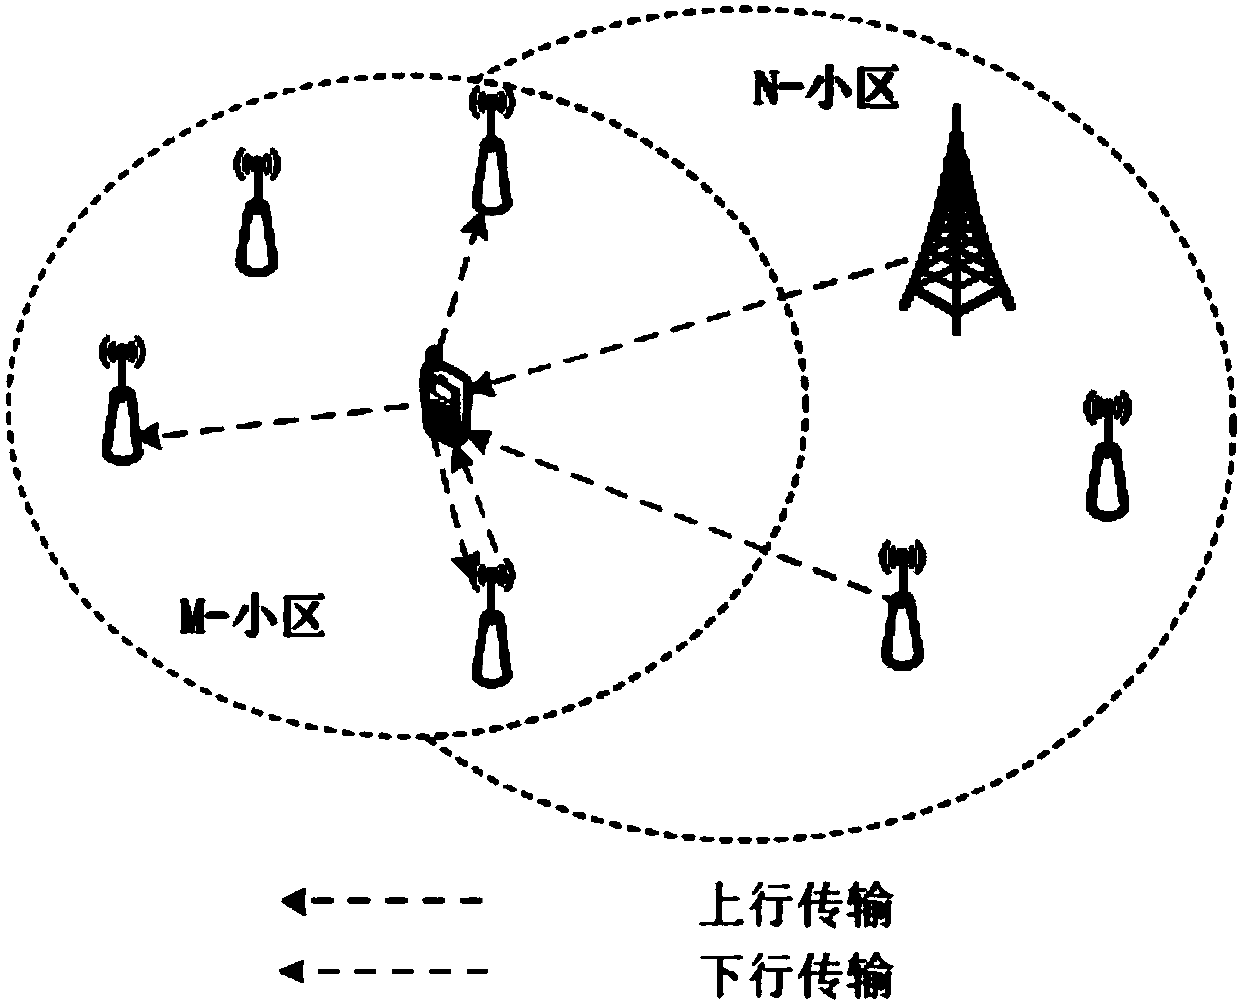 Matching game-based separation multi-access method in ultra dense heterogeneous network